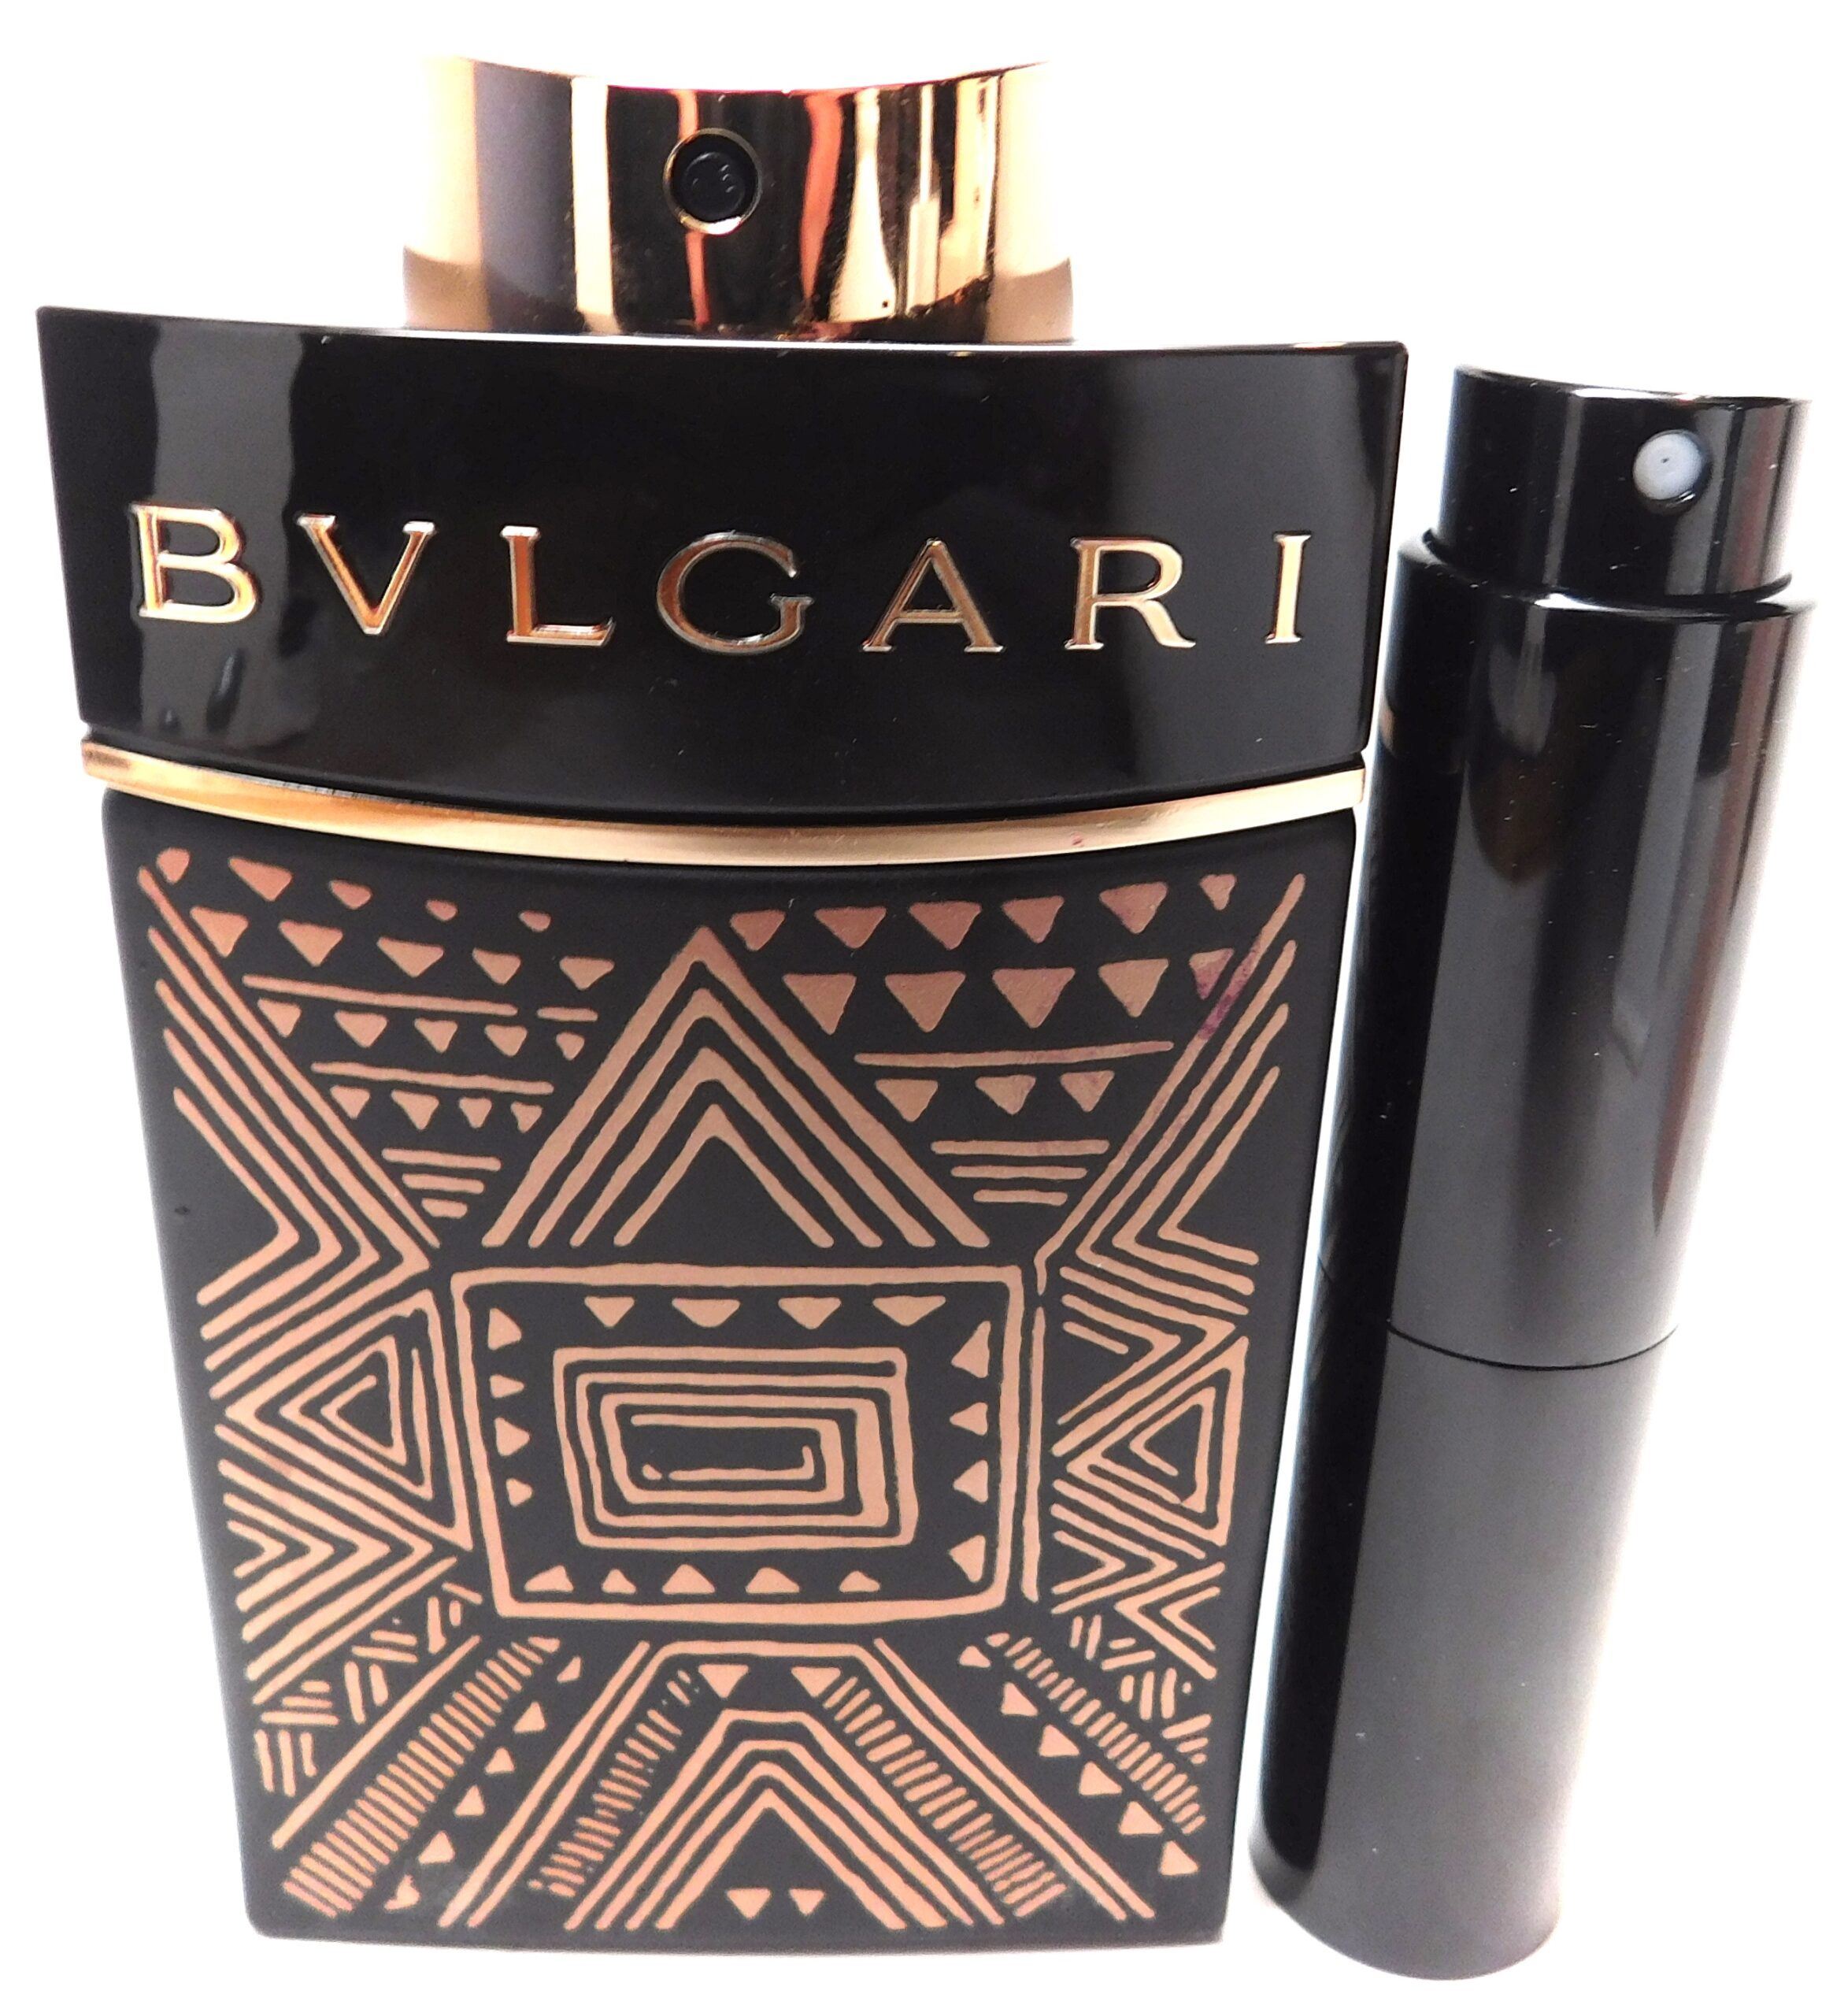 bvlgari black gold perfume